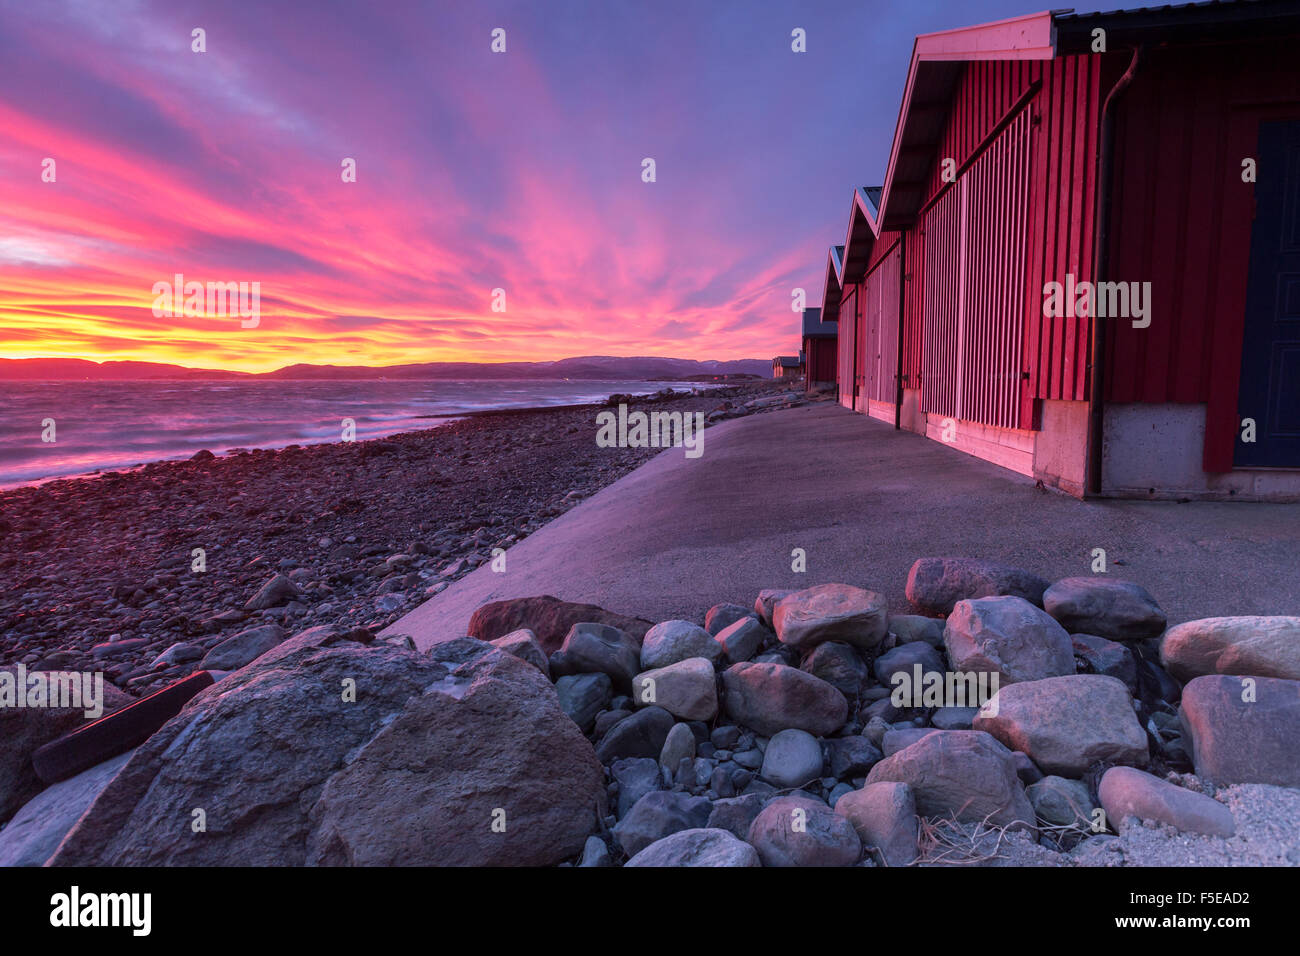 The colors of dawn light up the houses of fishermen, Arland Brekstad, Trondelag, Norway, Scandinavia, Europe Stock Photo